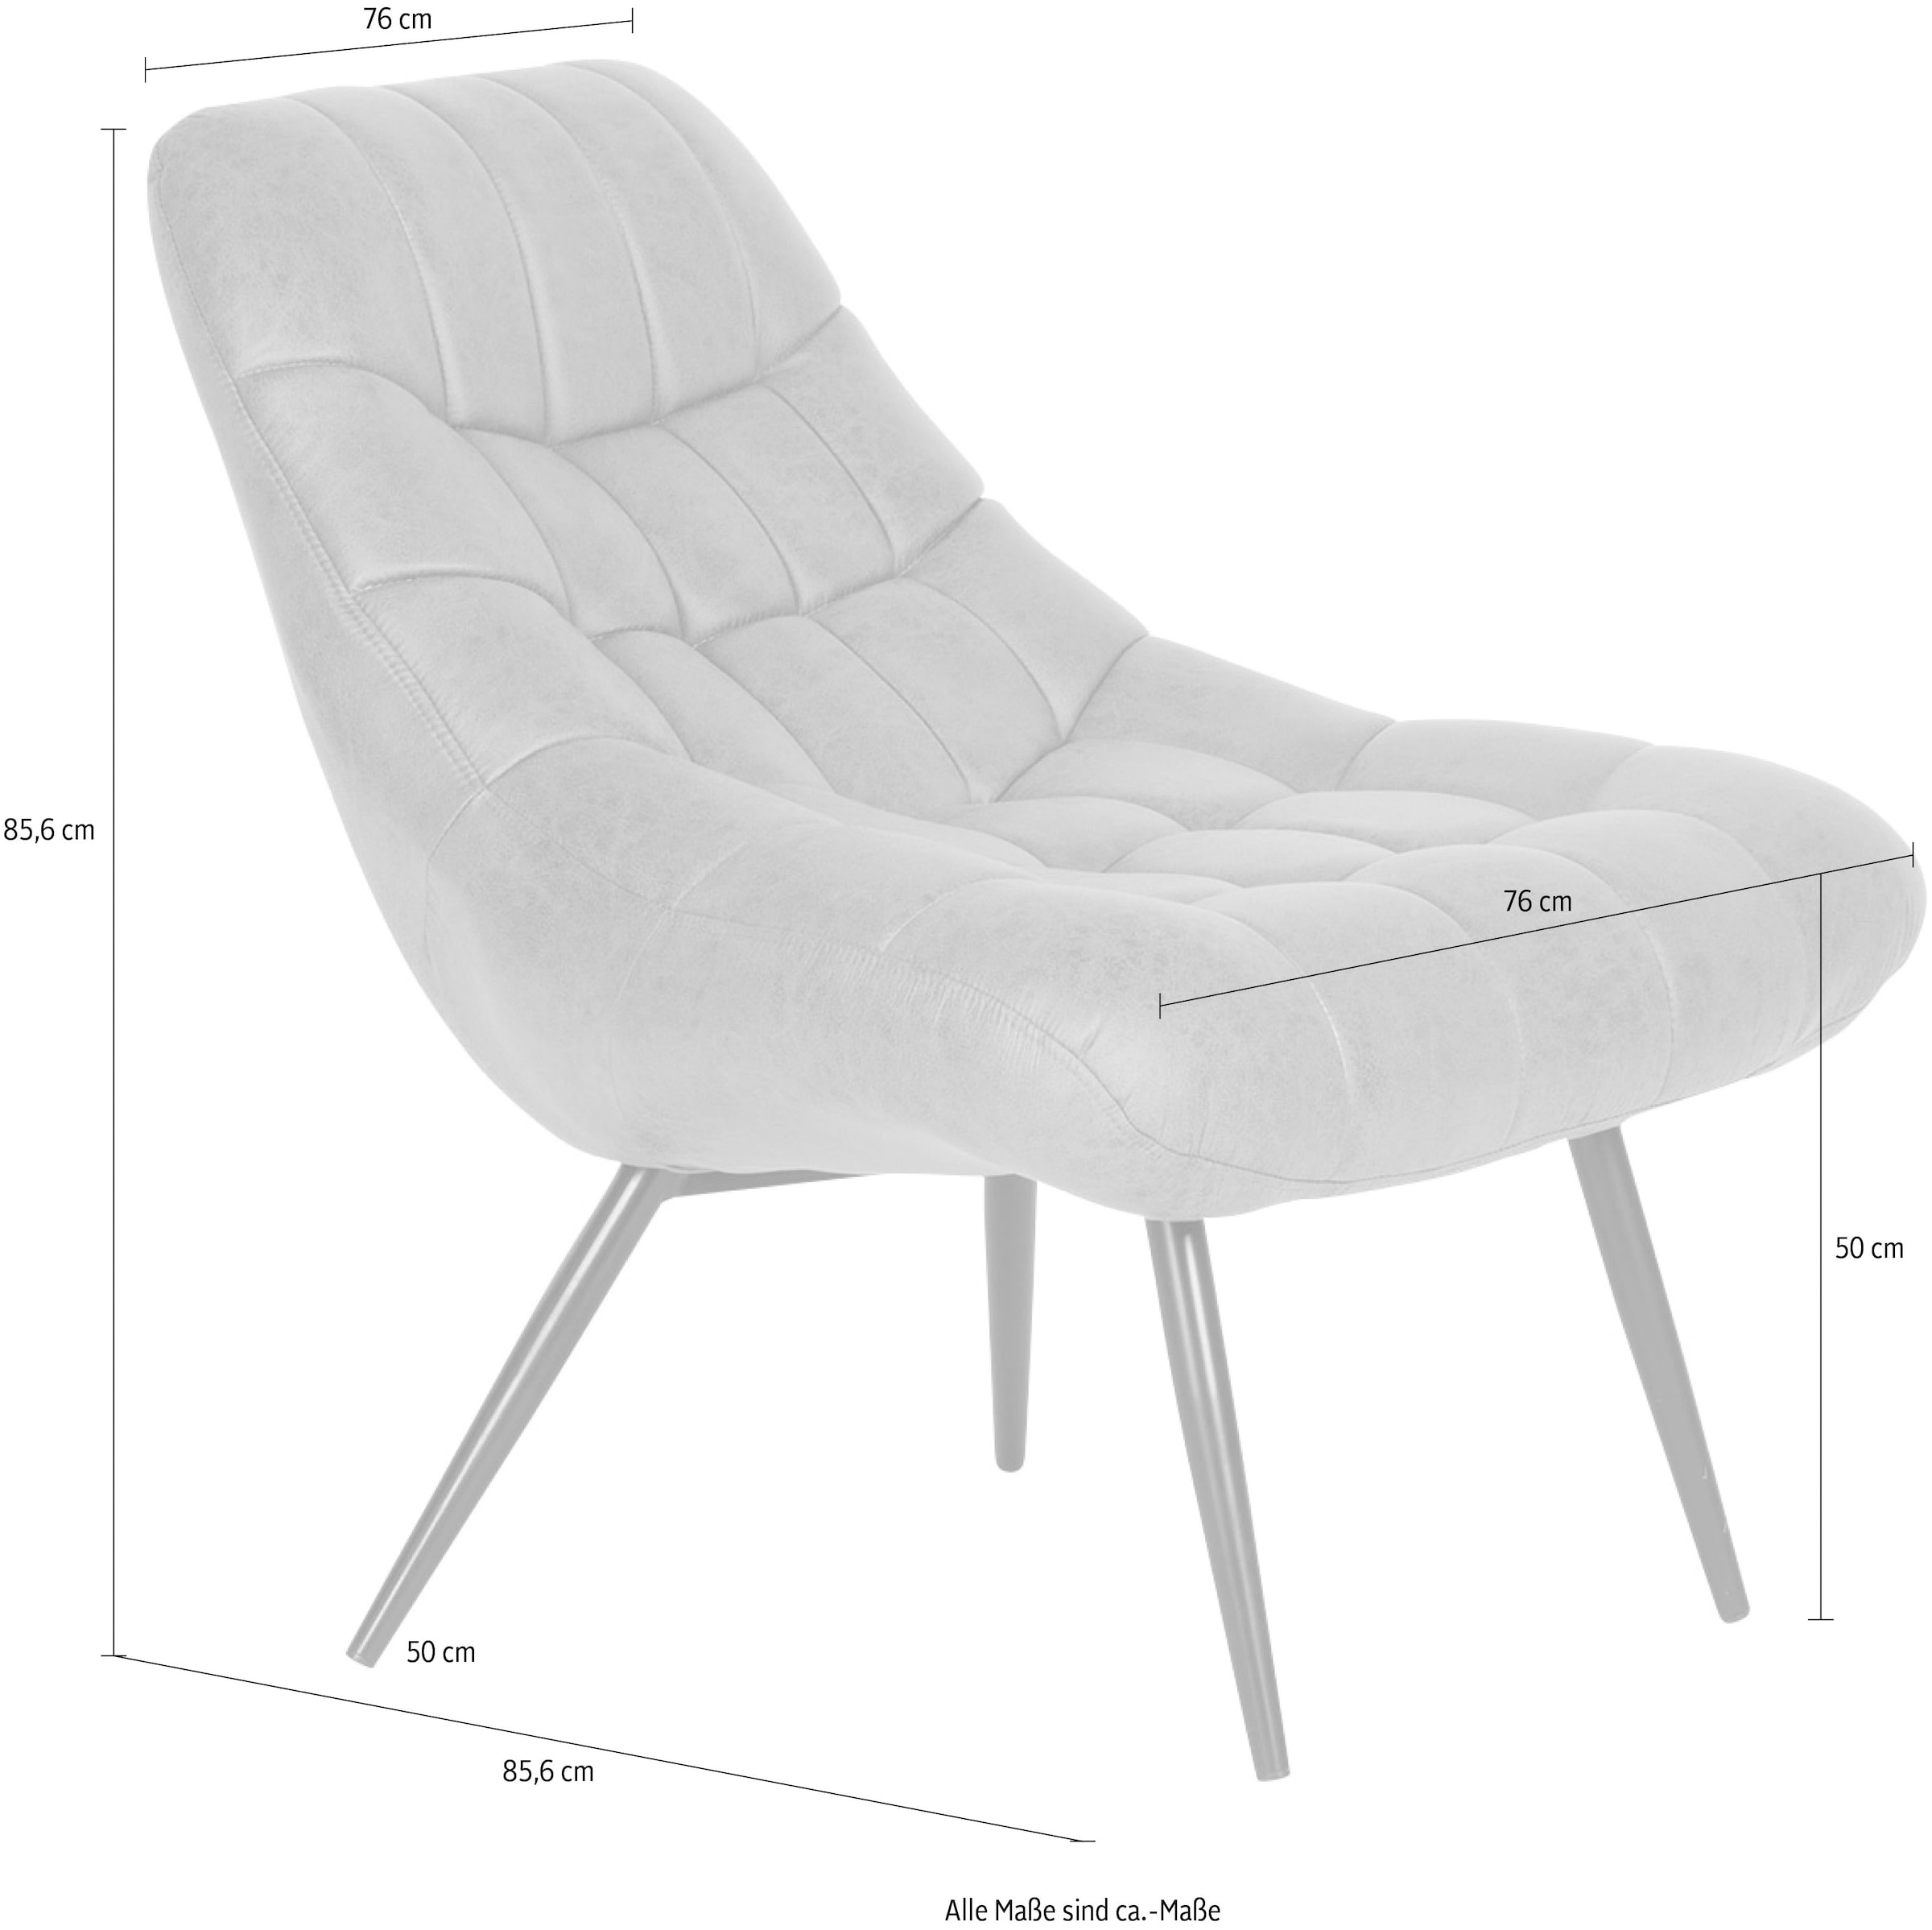 SalesFever Relaxsessel, XXL-Sitzfläche mit üppiger Steppung